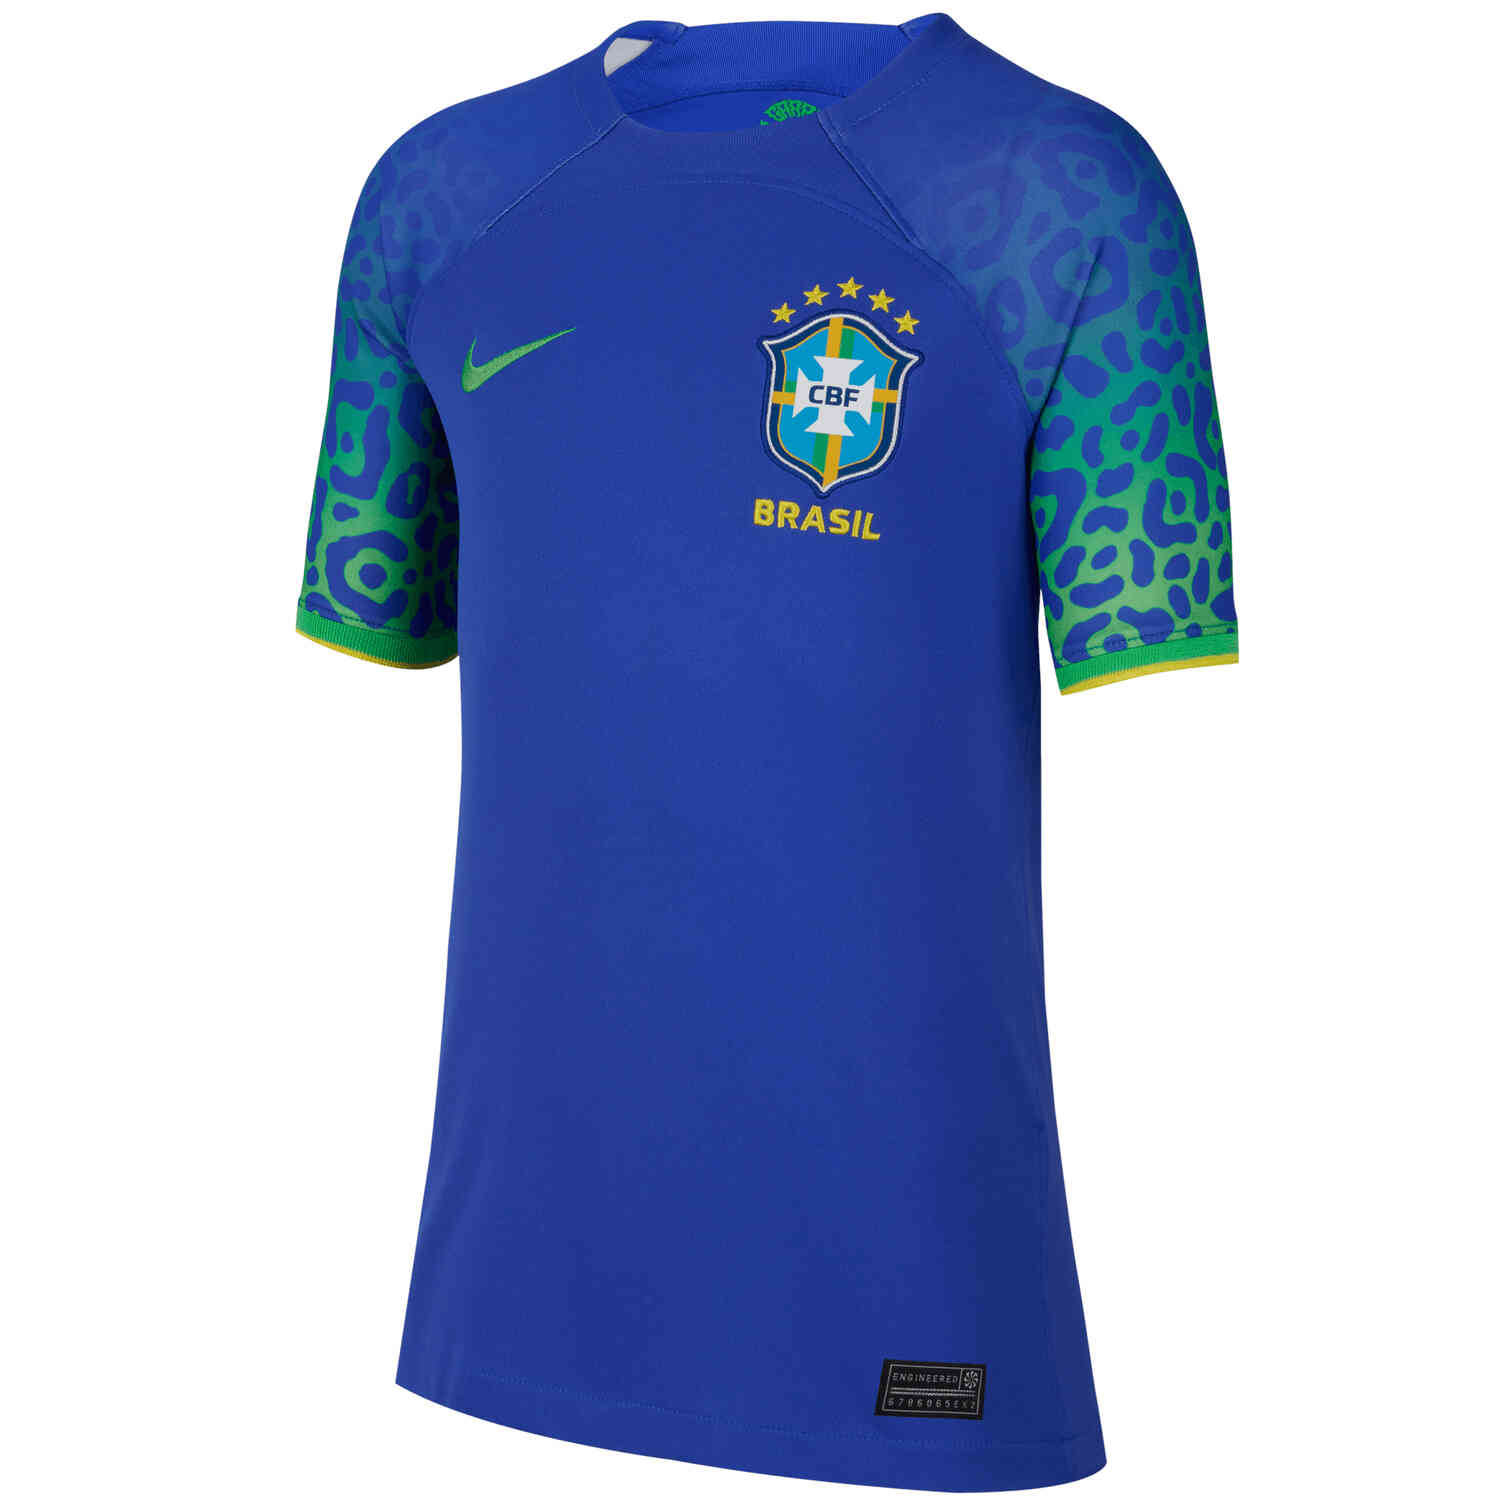 Brazil soccer jersey plandetransformacion.unirioja.es